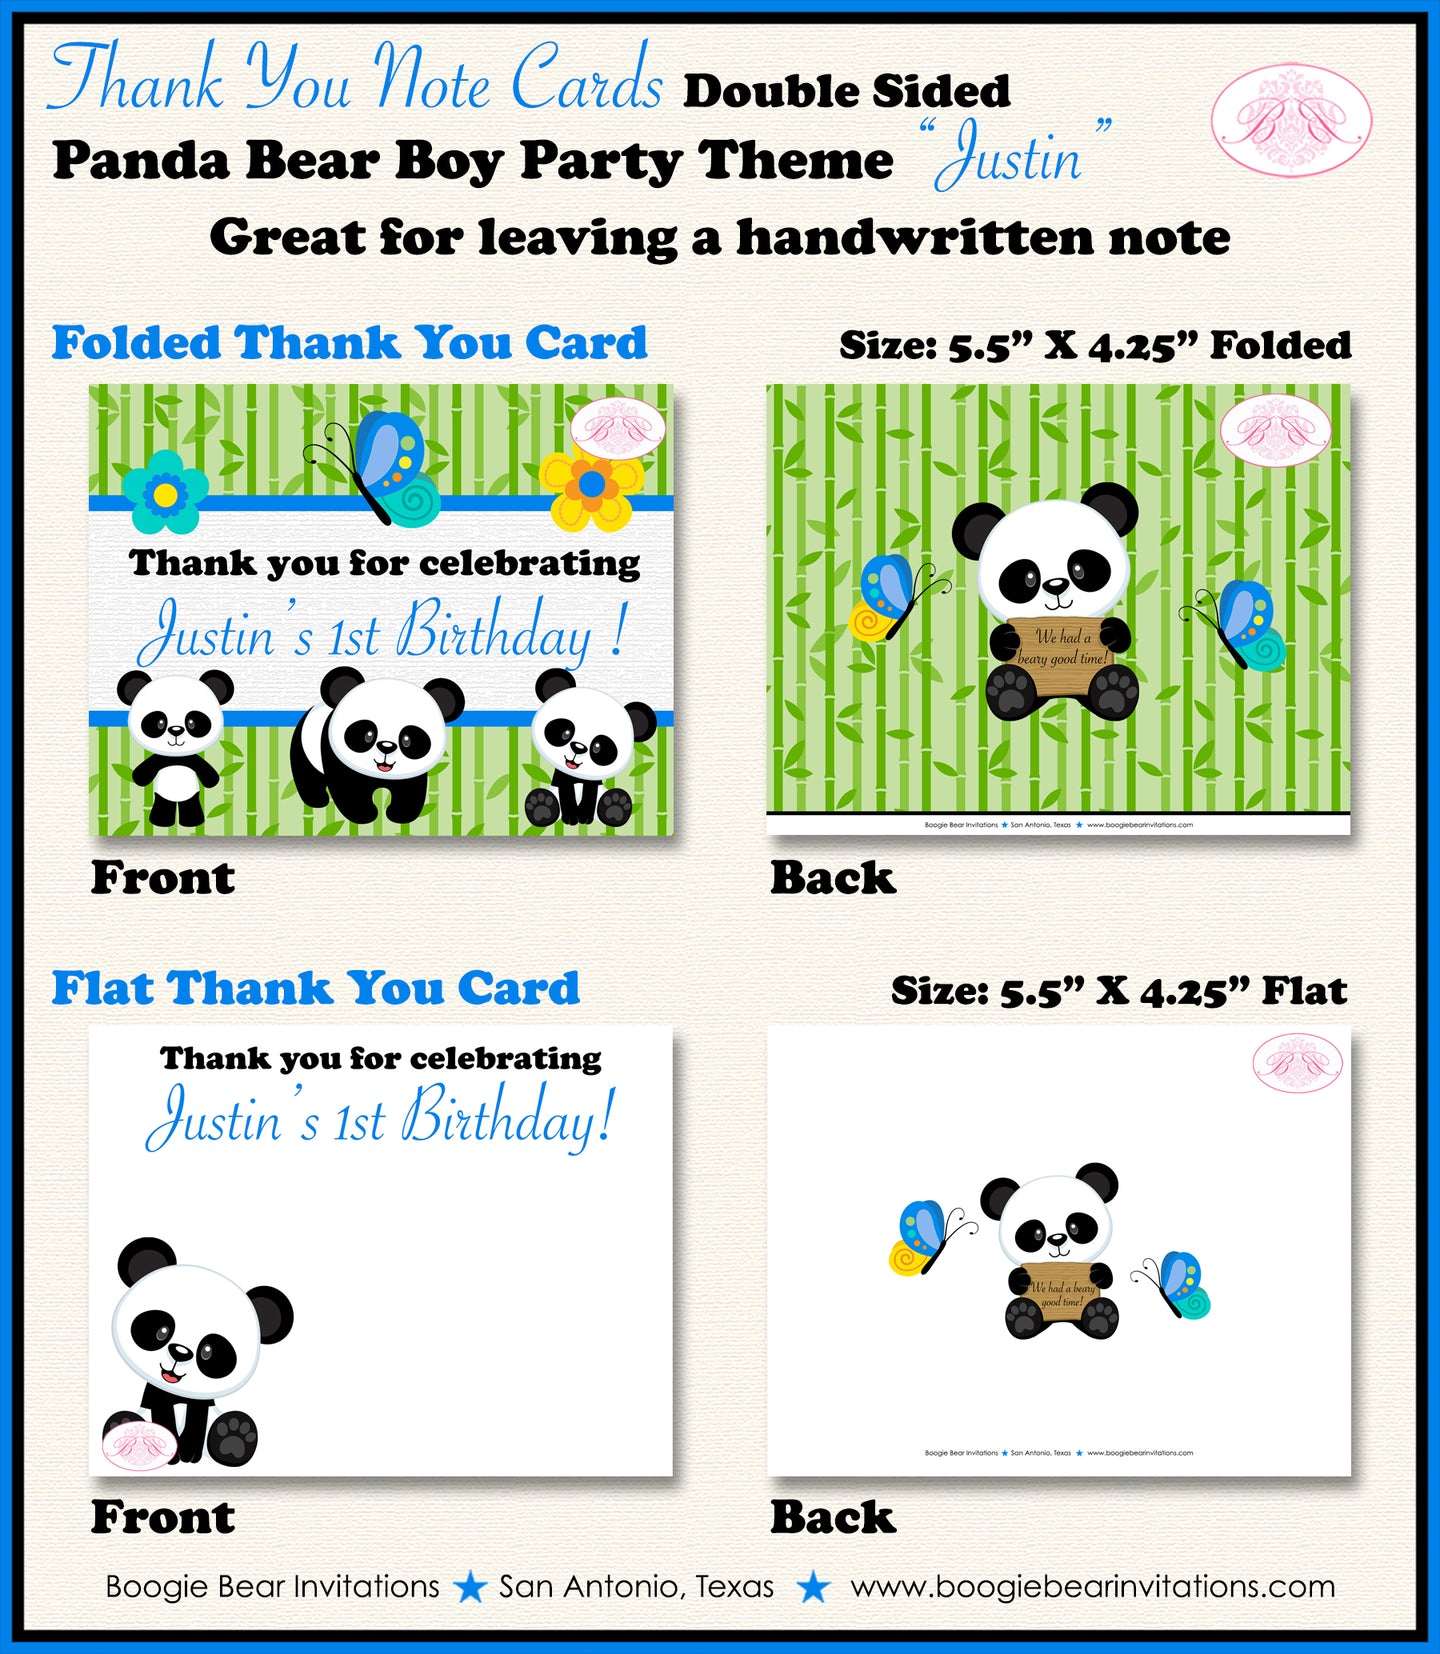 Blue Panda Bear Birthday Party Thank You Card Boy Boogie Bear Invitations Justin Theme Printed